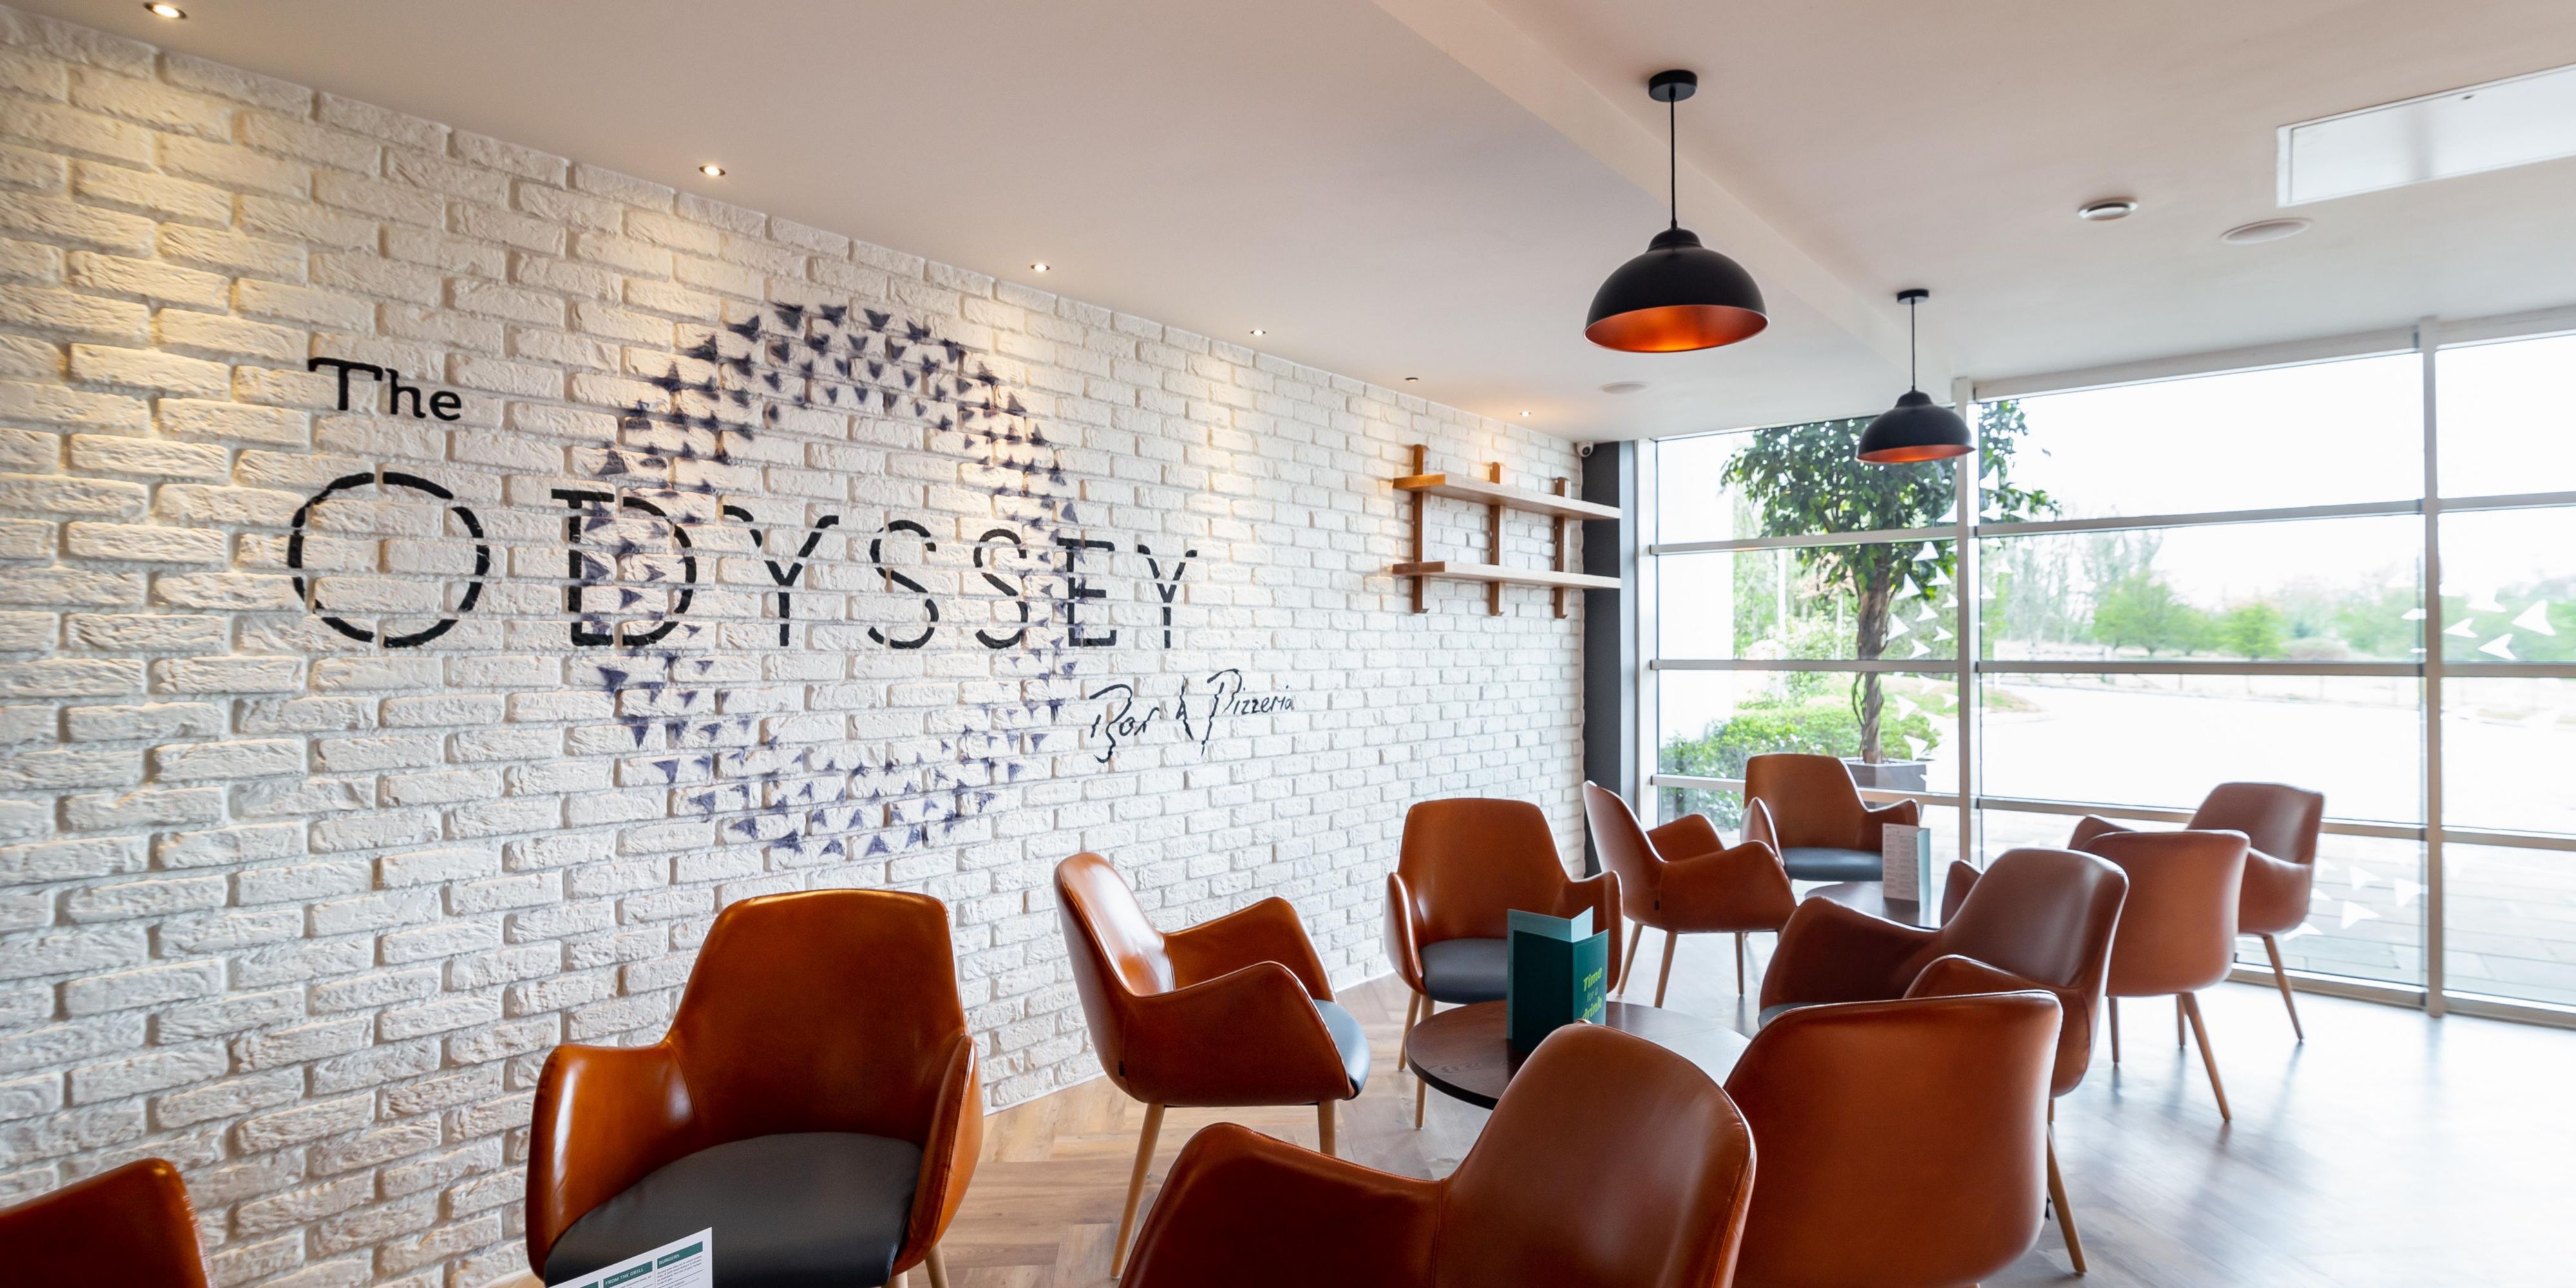 The Odyssey Restaurant, Bar and Pizzeria